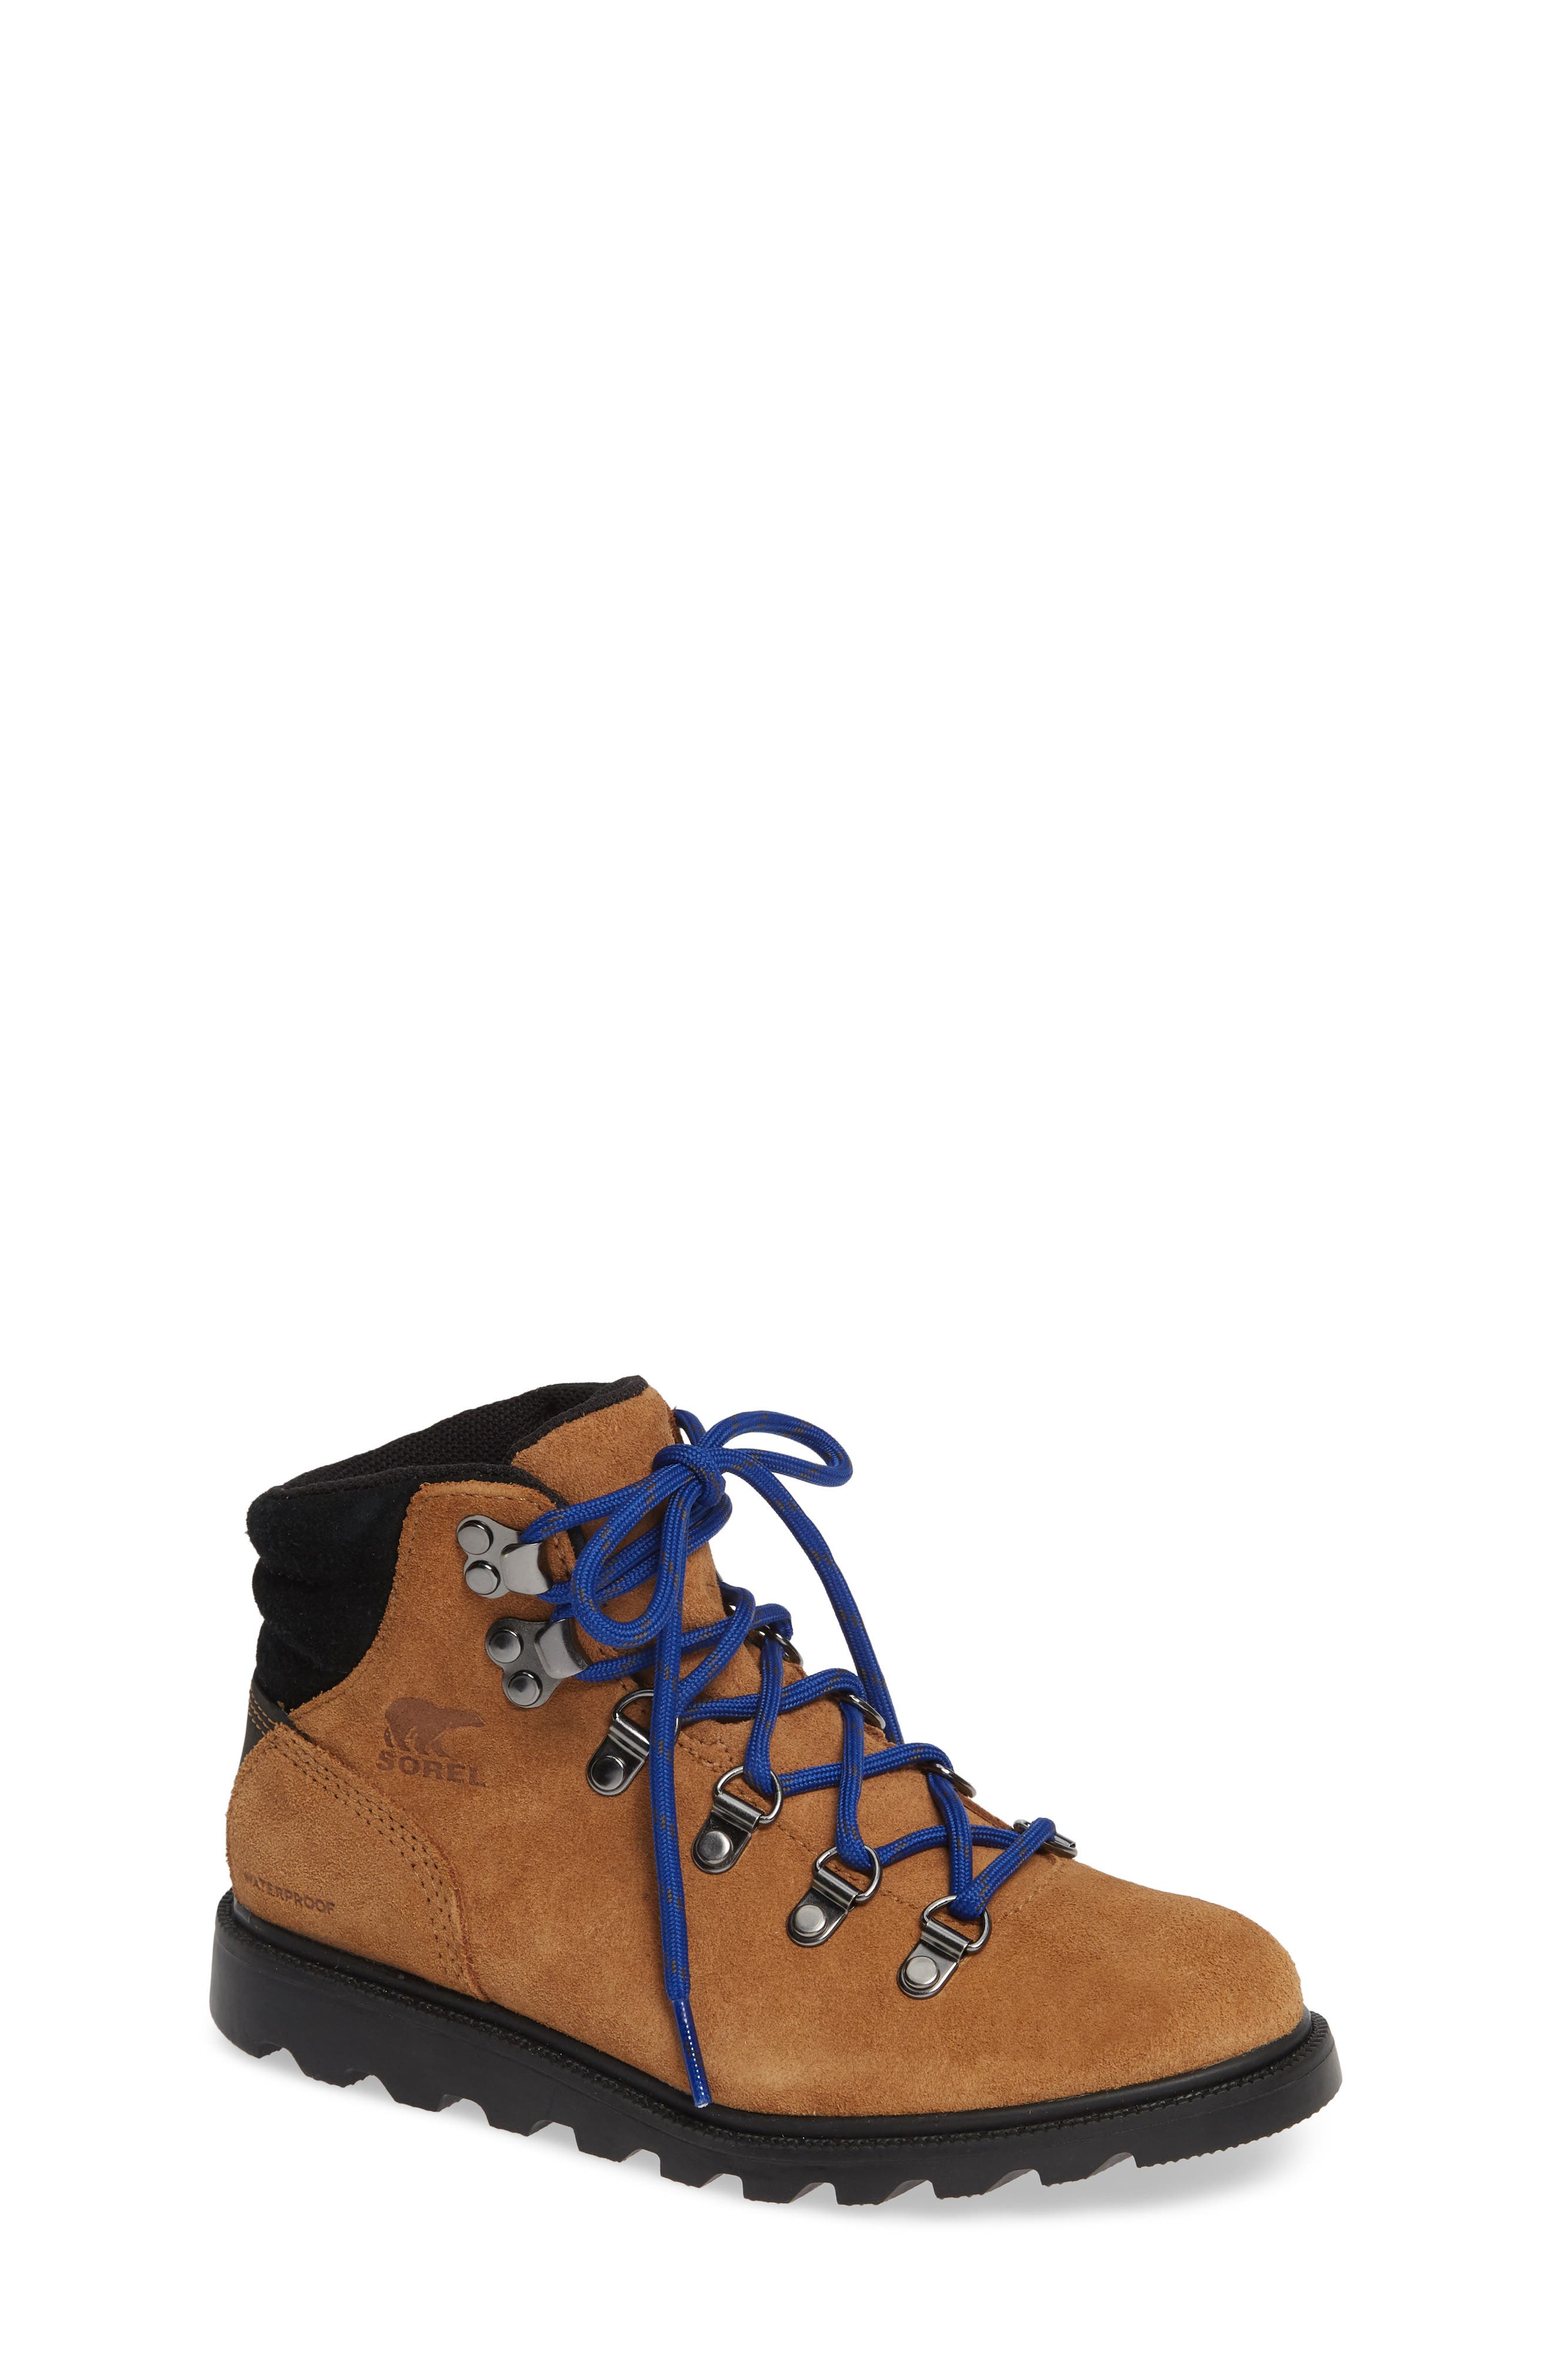 sorrel hiking boots